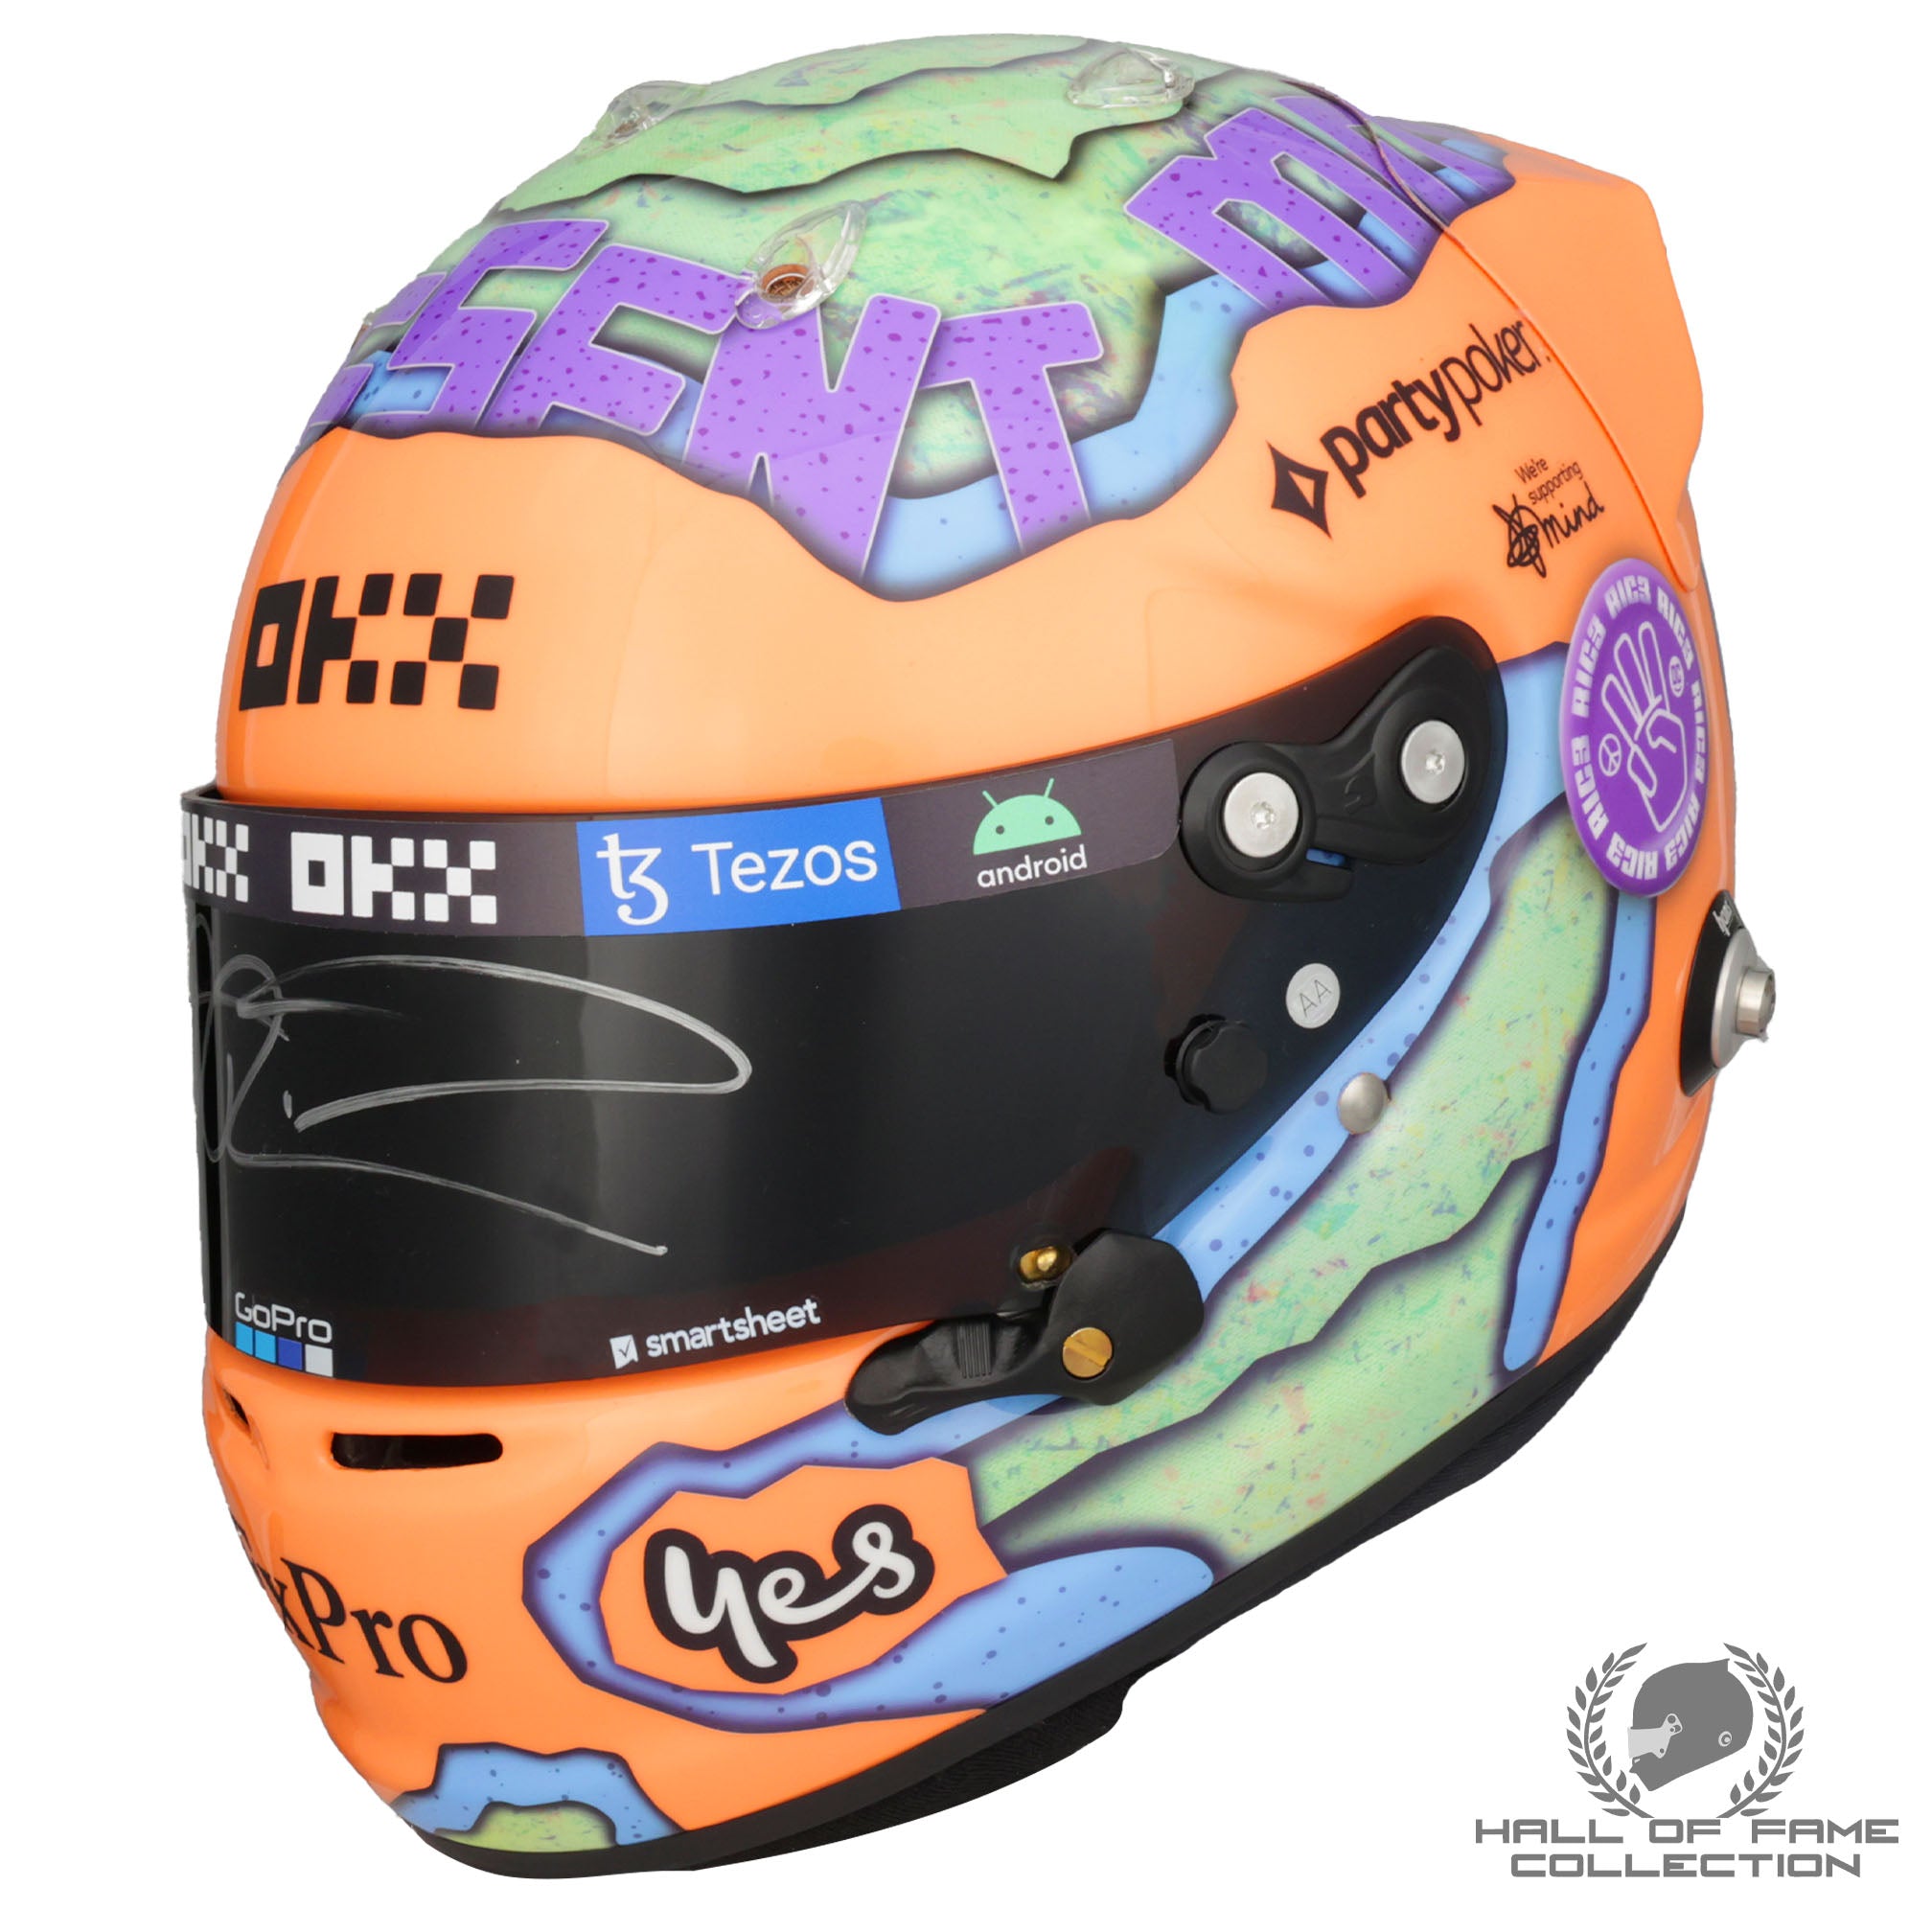 2022 Daniel Ricciardo Signed Official Promo McLaren F1 Helmet